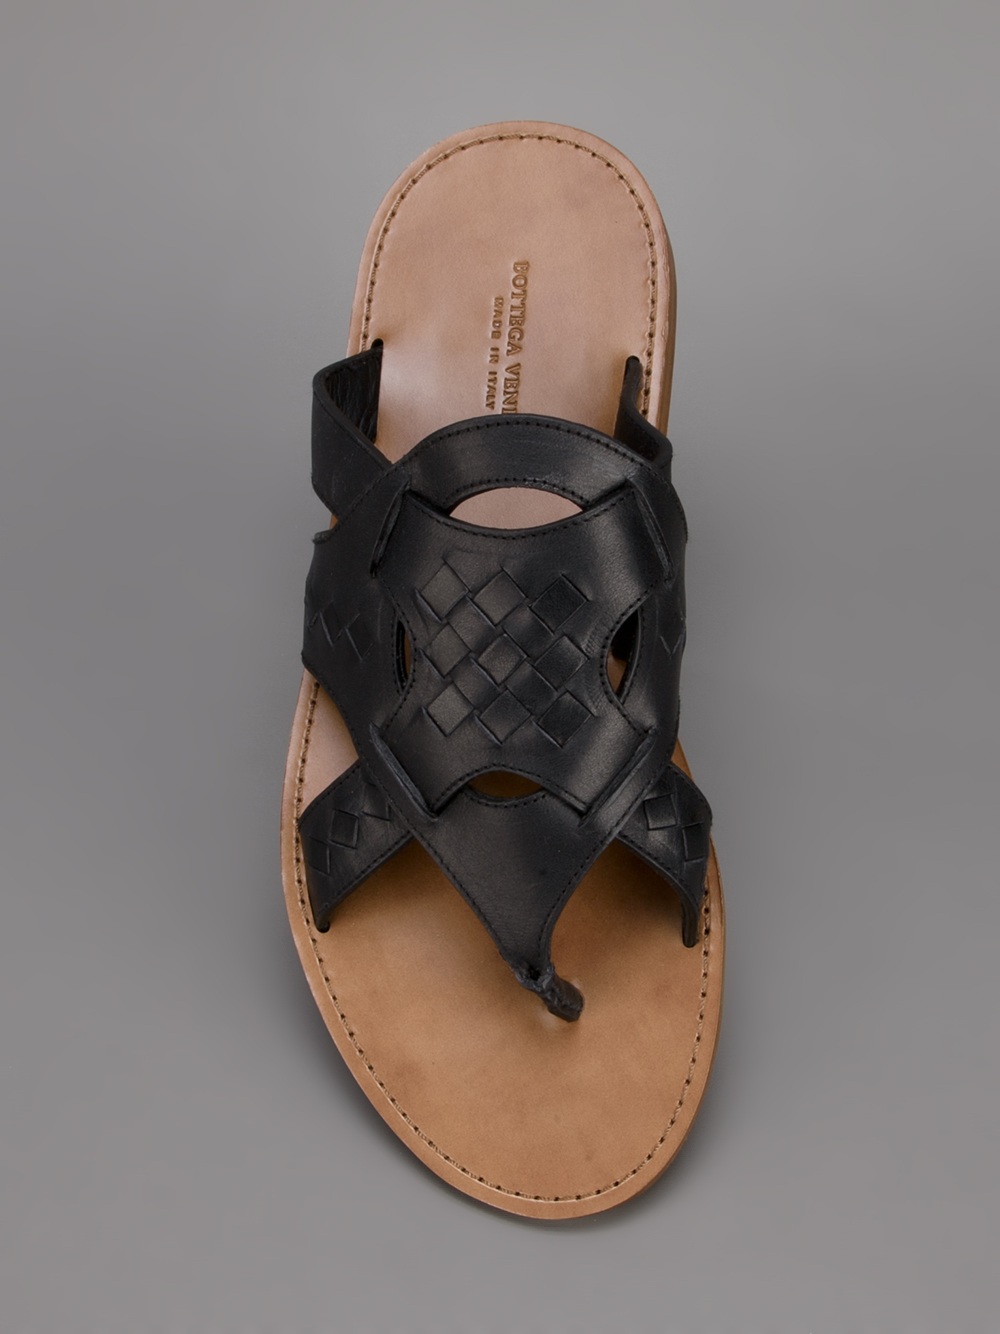 Lyst - Bottega Veneta Slip On Strappy Sandal in Black for Men